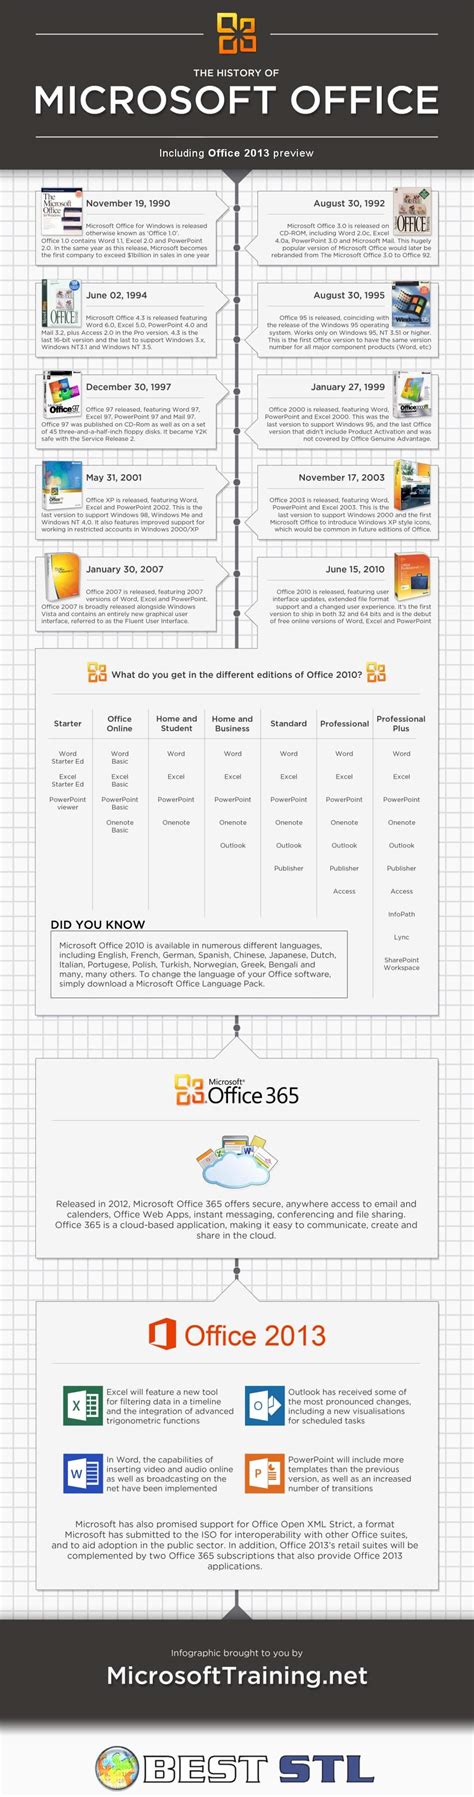 Historia De Microsoft Office Infografia Infographic Software